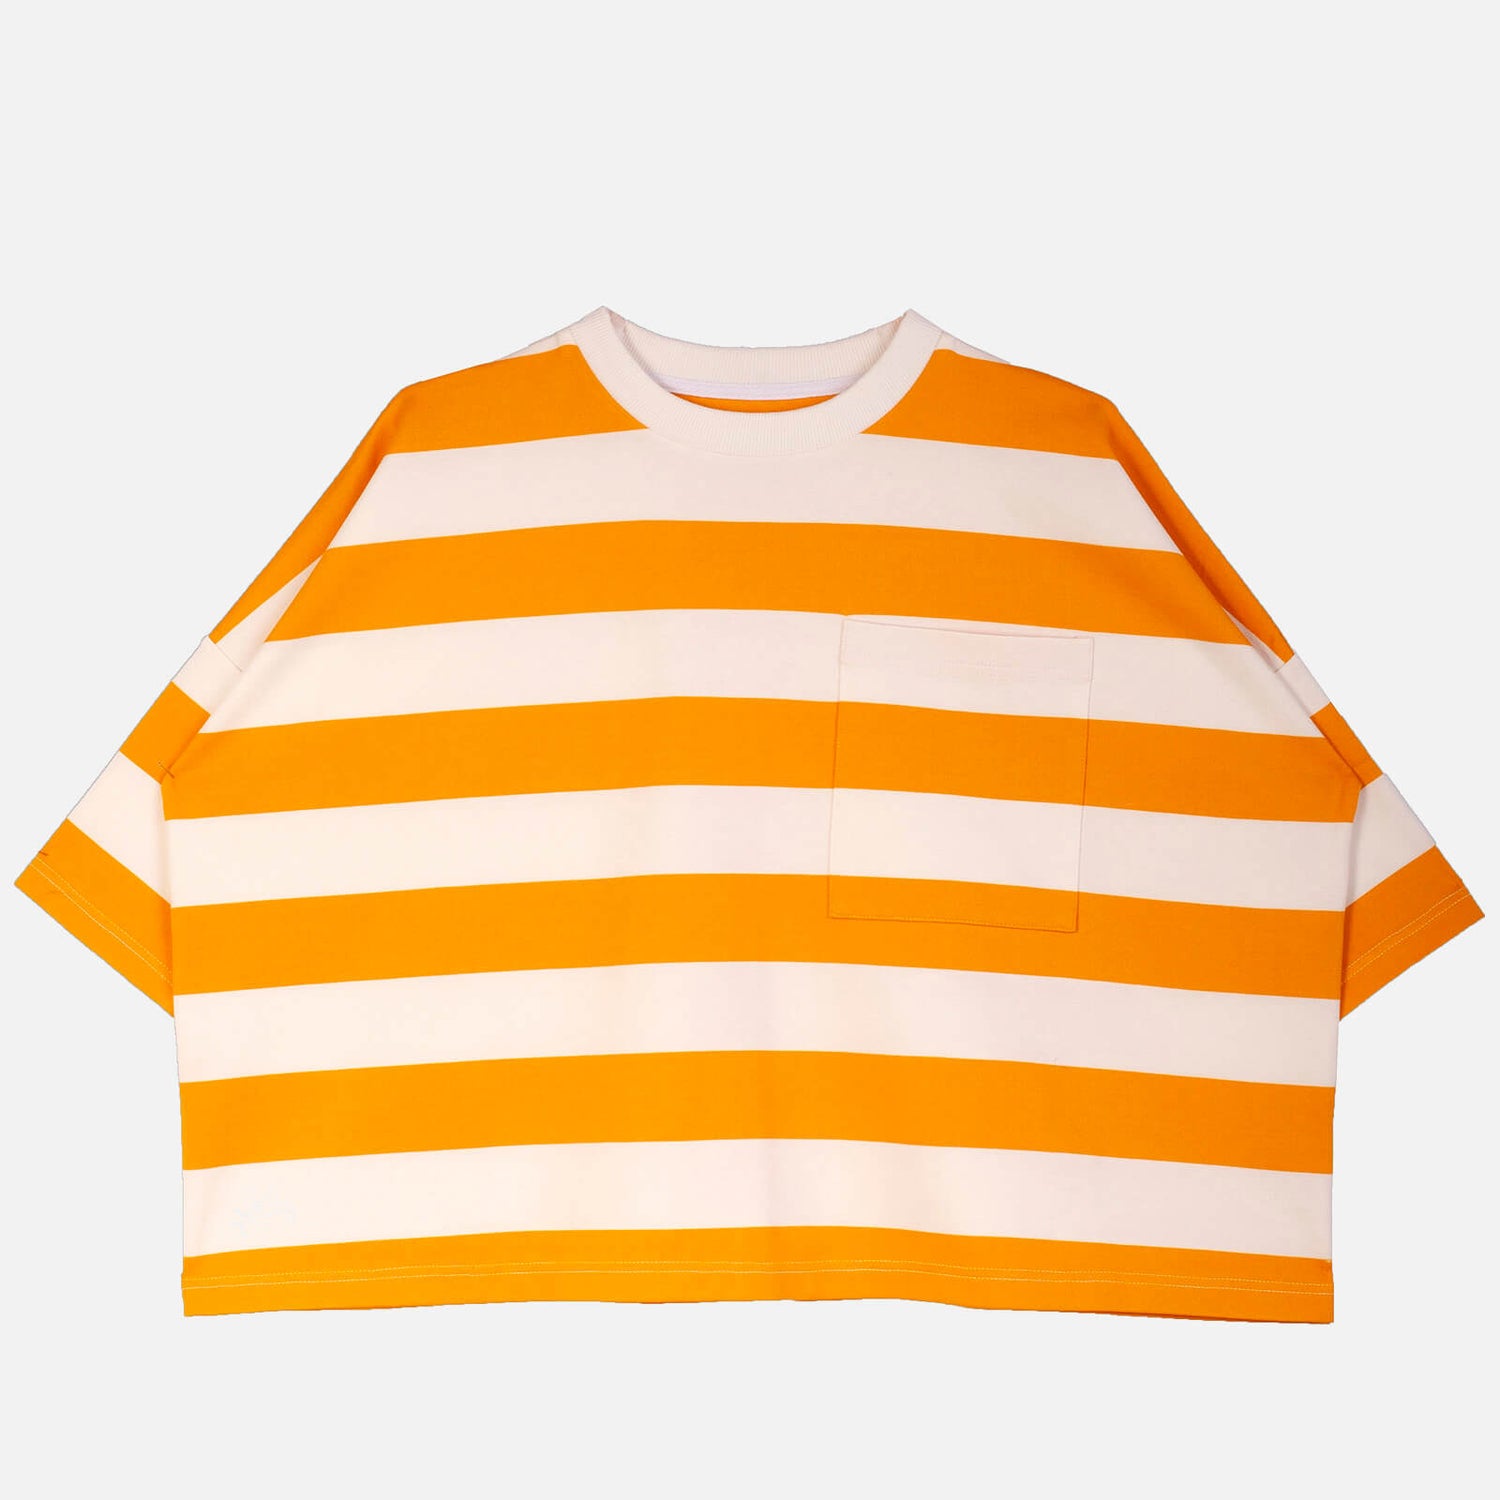 L.F Markey Women's Winston T-Shirt - Yellow - S/M